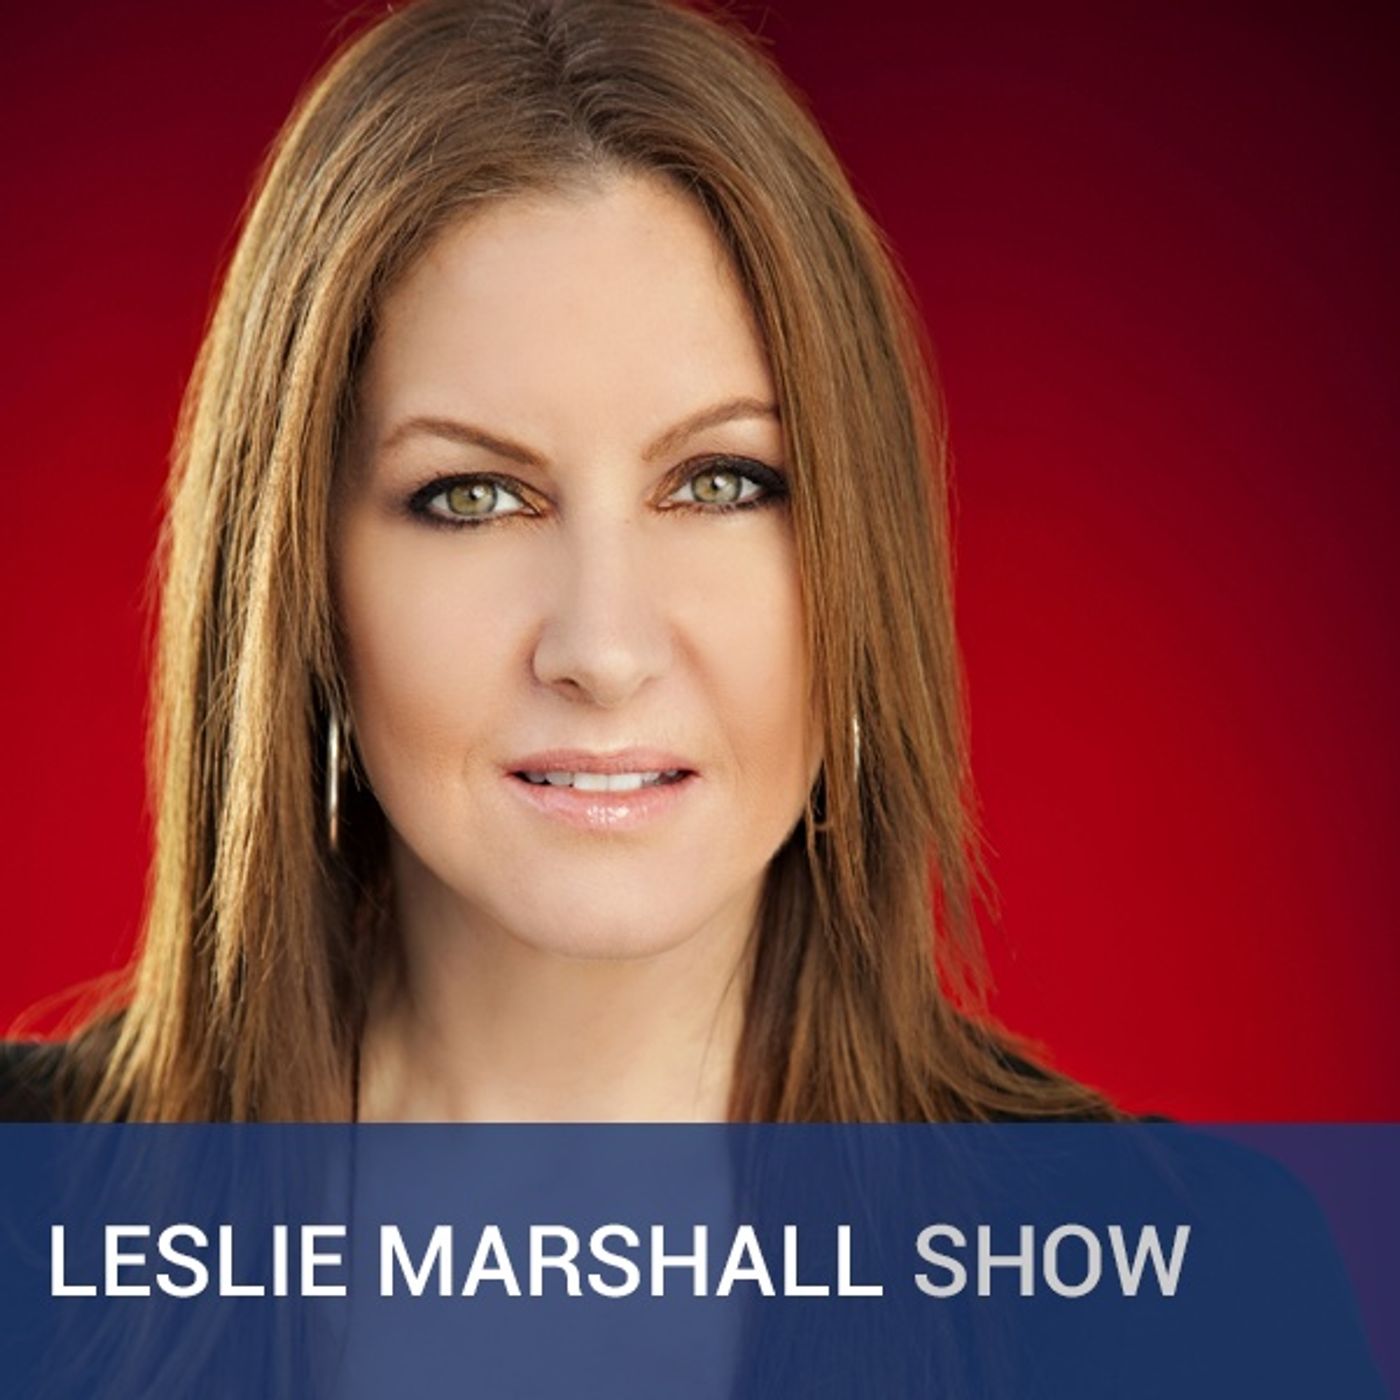 The Leslie Marshall Show